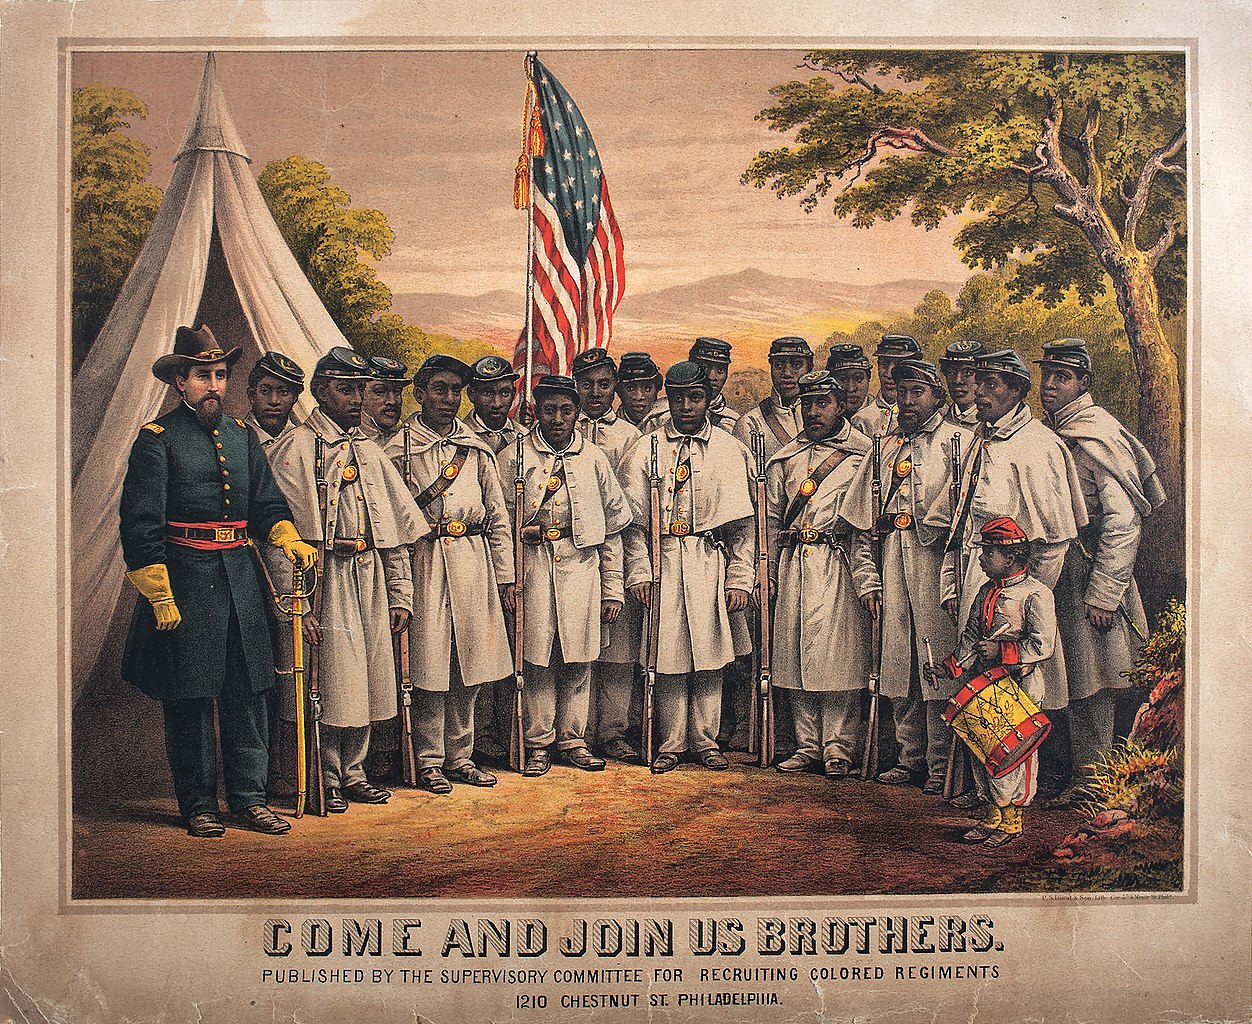 A Union recruitment poster targeting Black men, 1865.